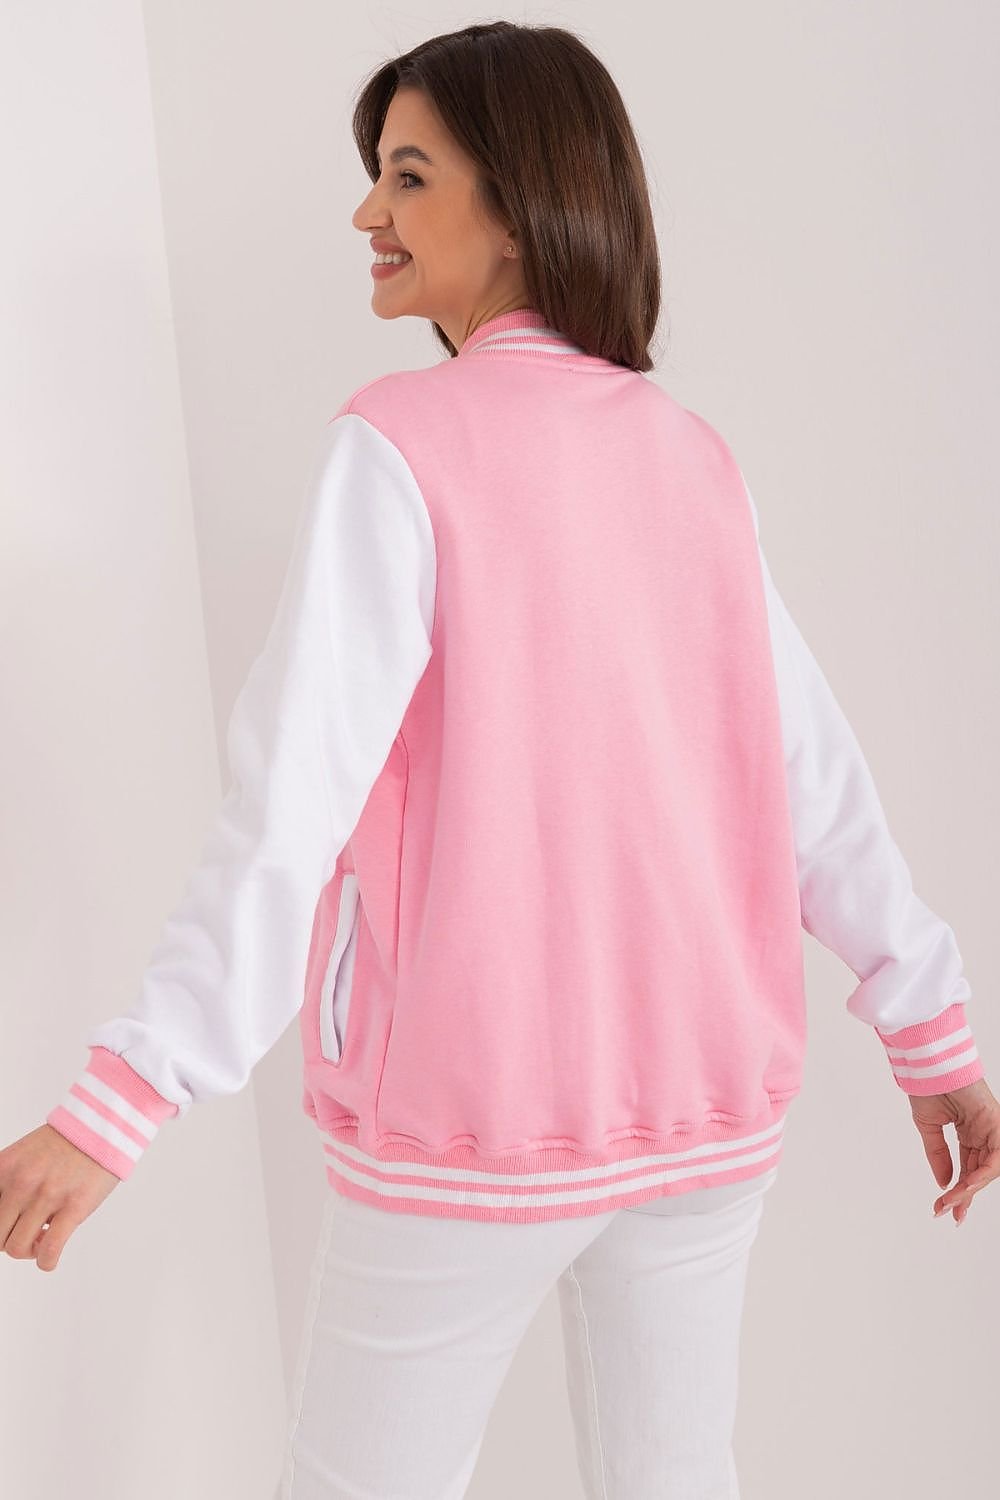 Pink Sporty Style Jacket